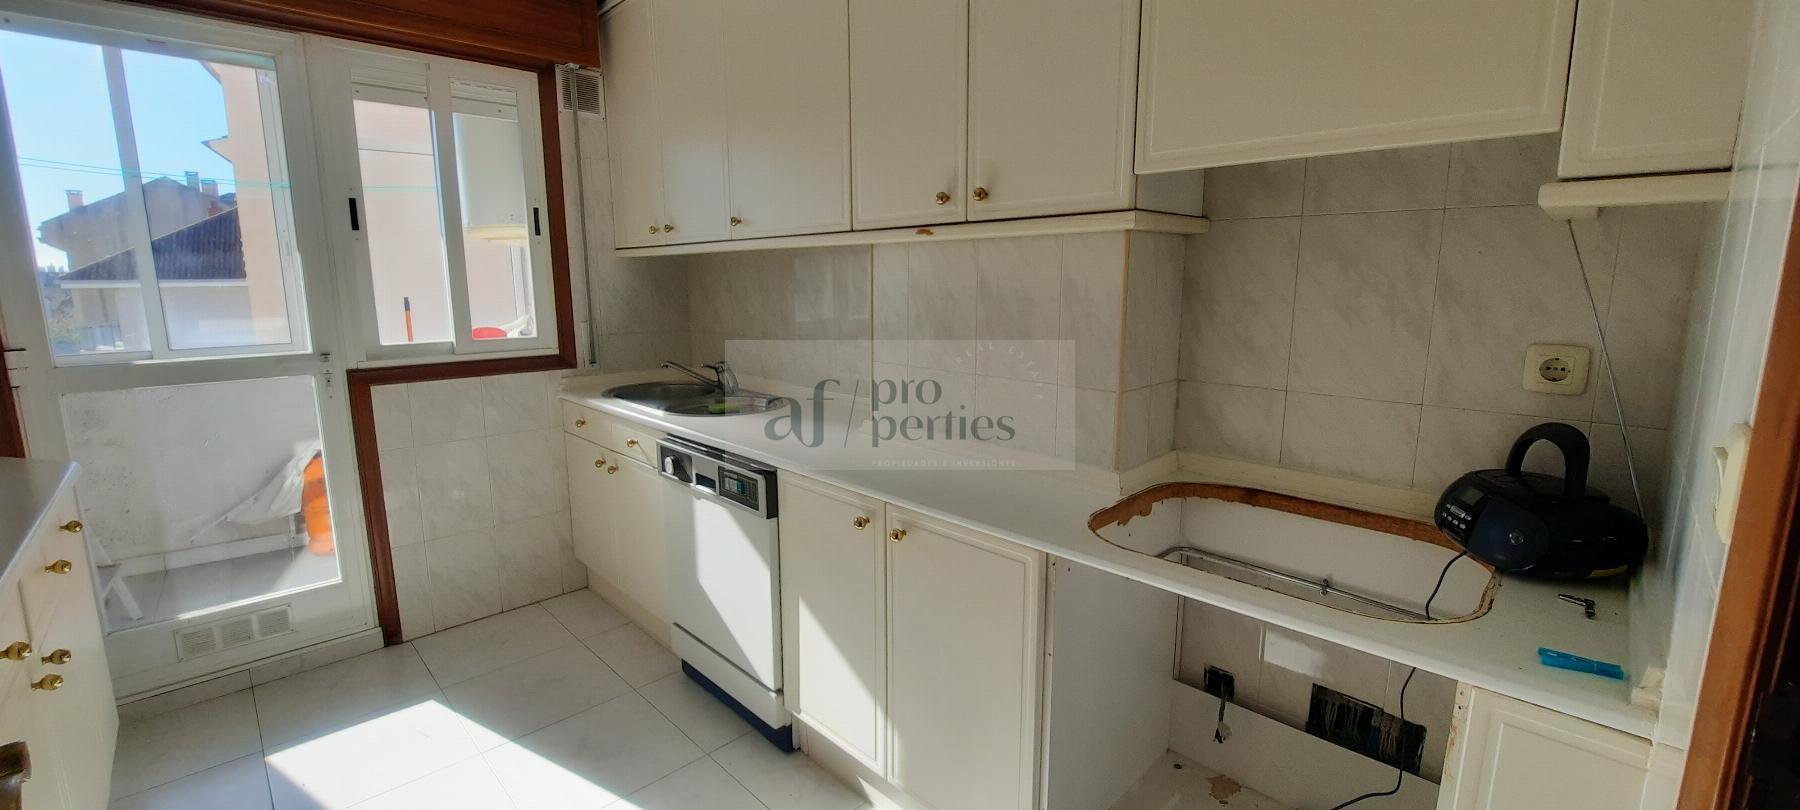 For sale of flat in Sanxenxo